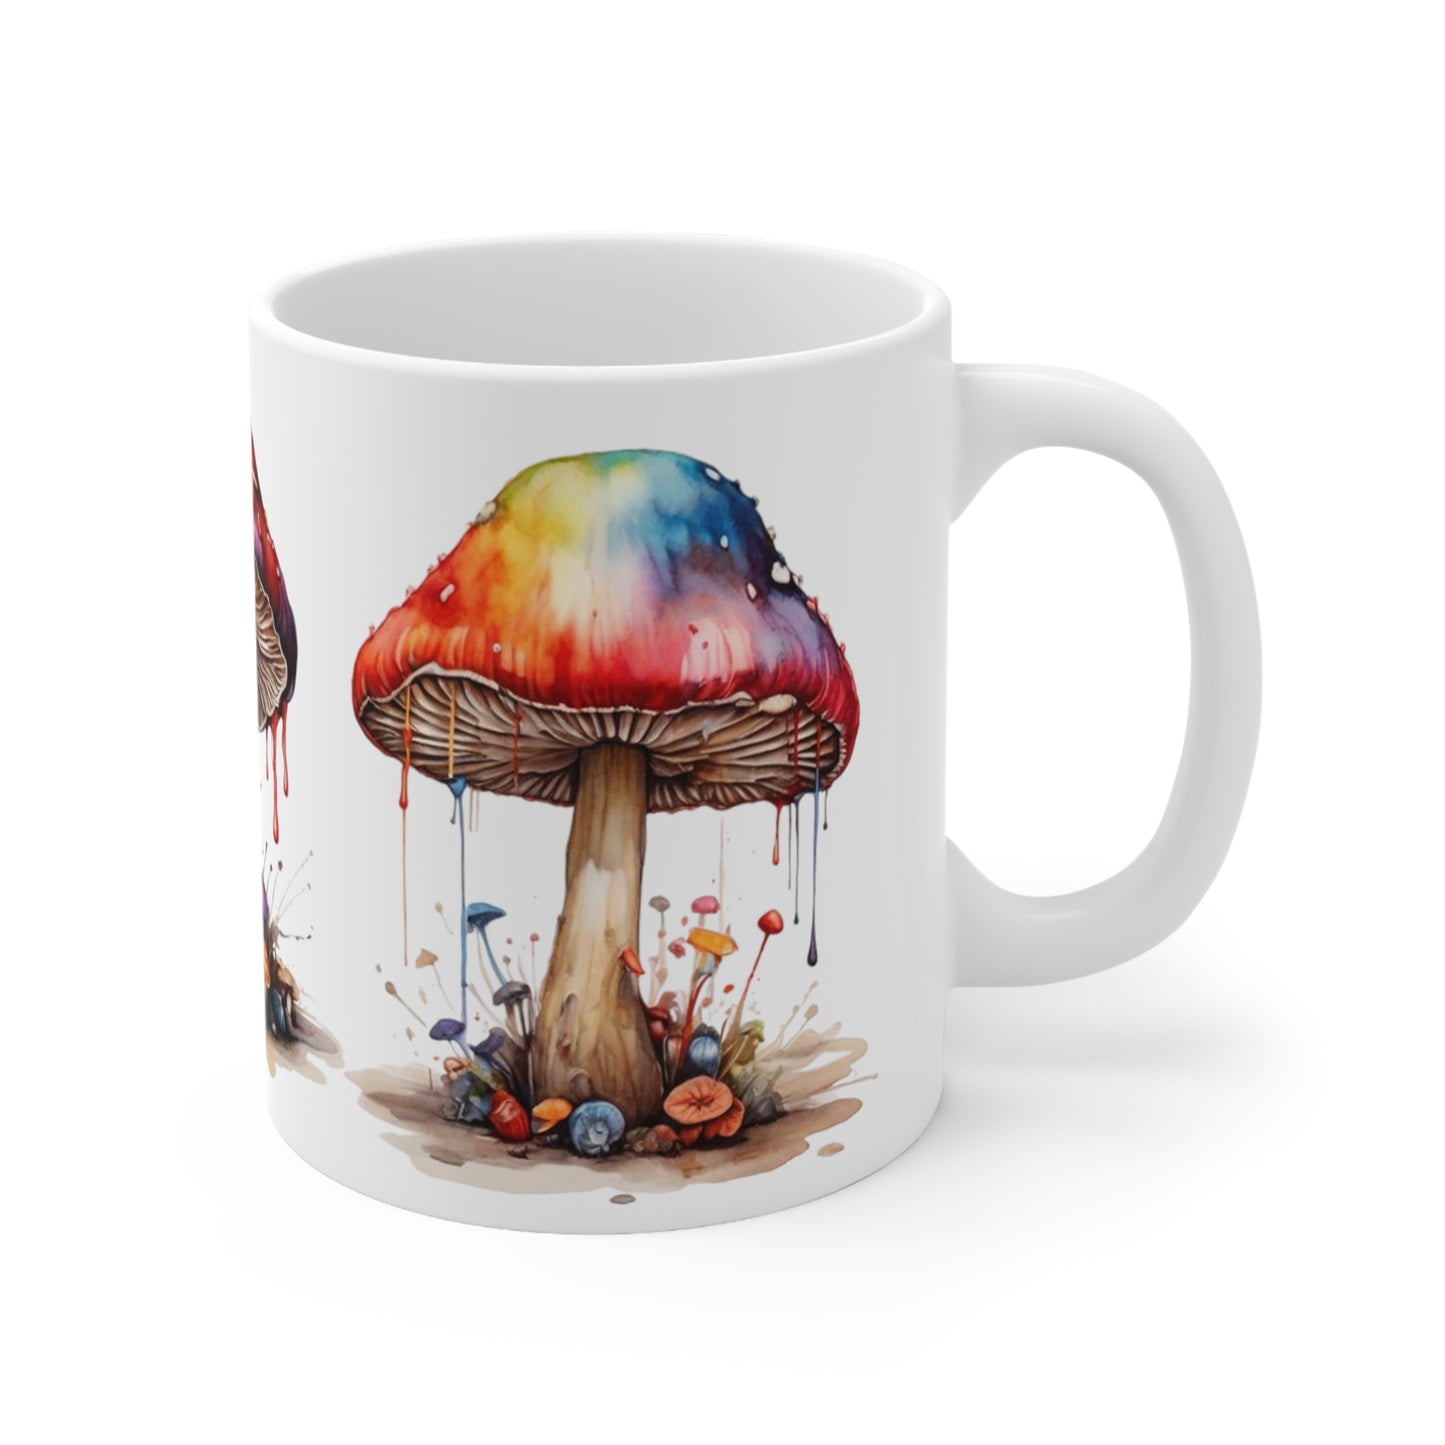 Colourful Mushrooms Mug - Ceramic Coffee Mug 11oz